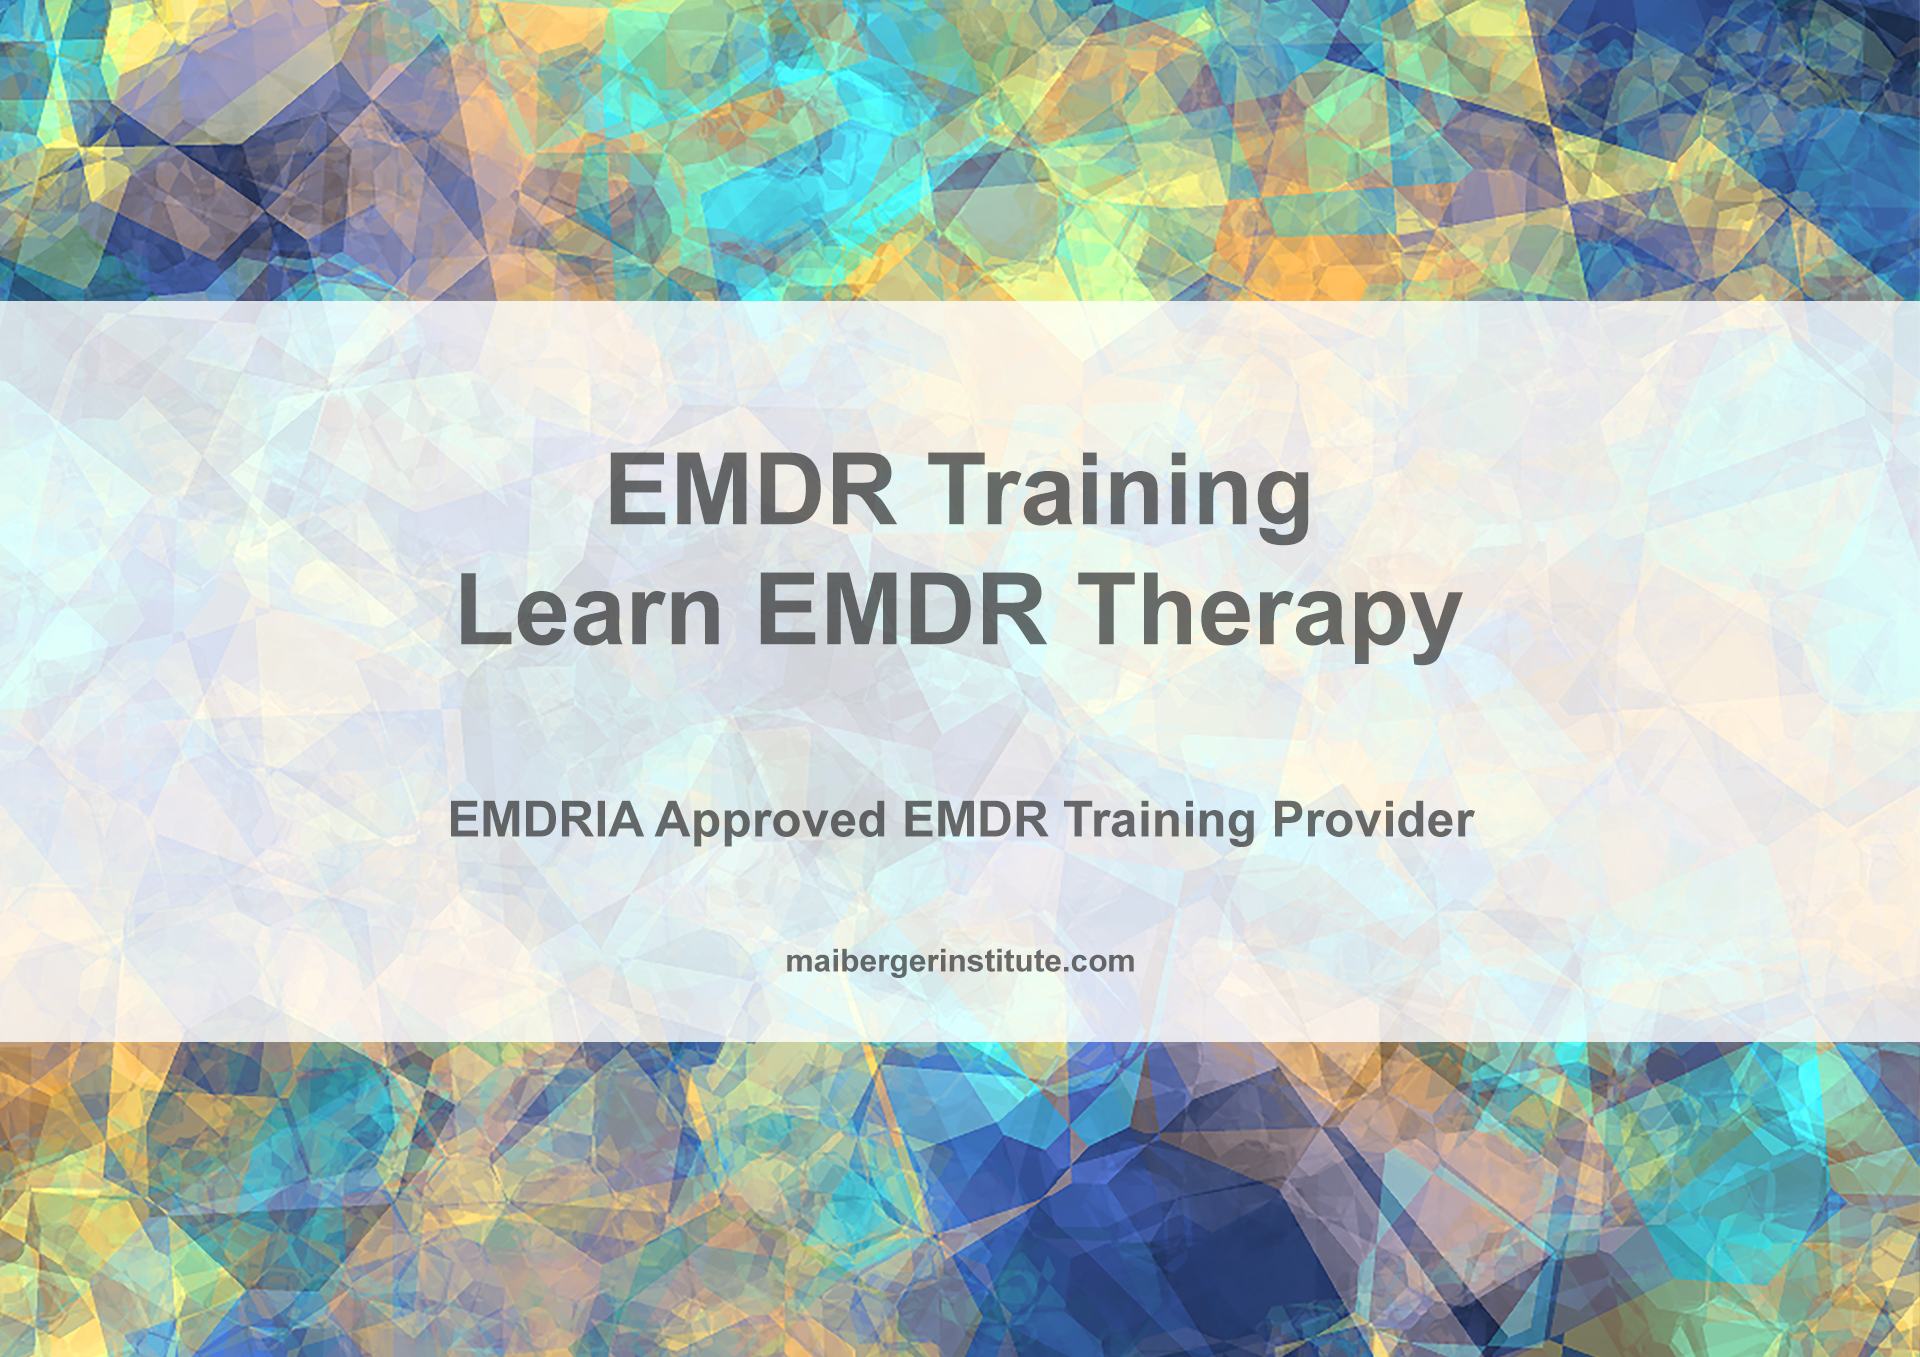 EMDR Training Learn EMDR Therapy to Help Heal PTSD and Trauma